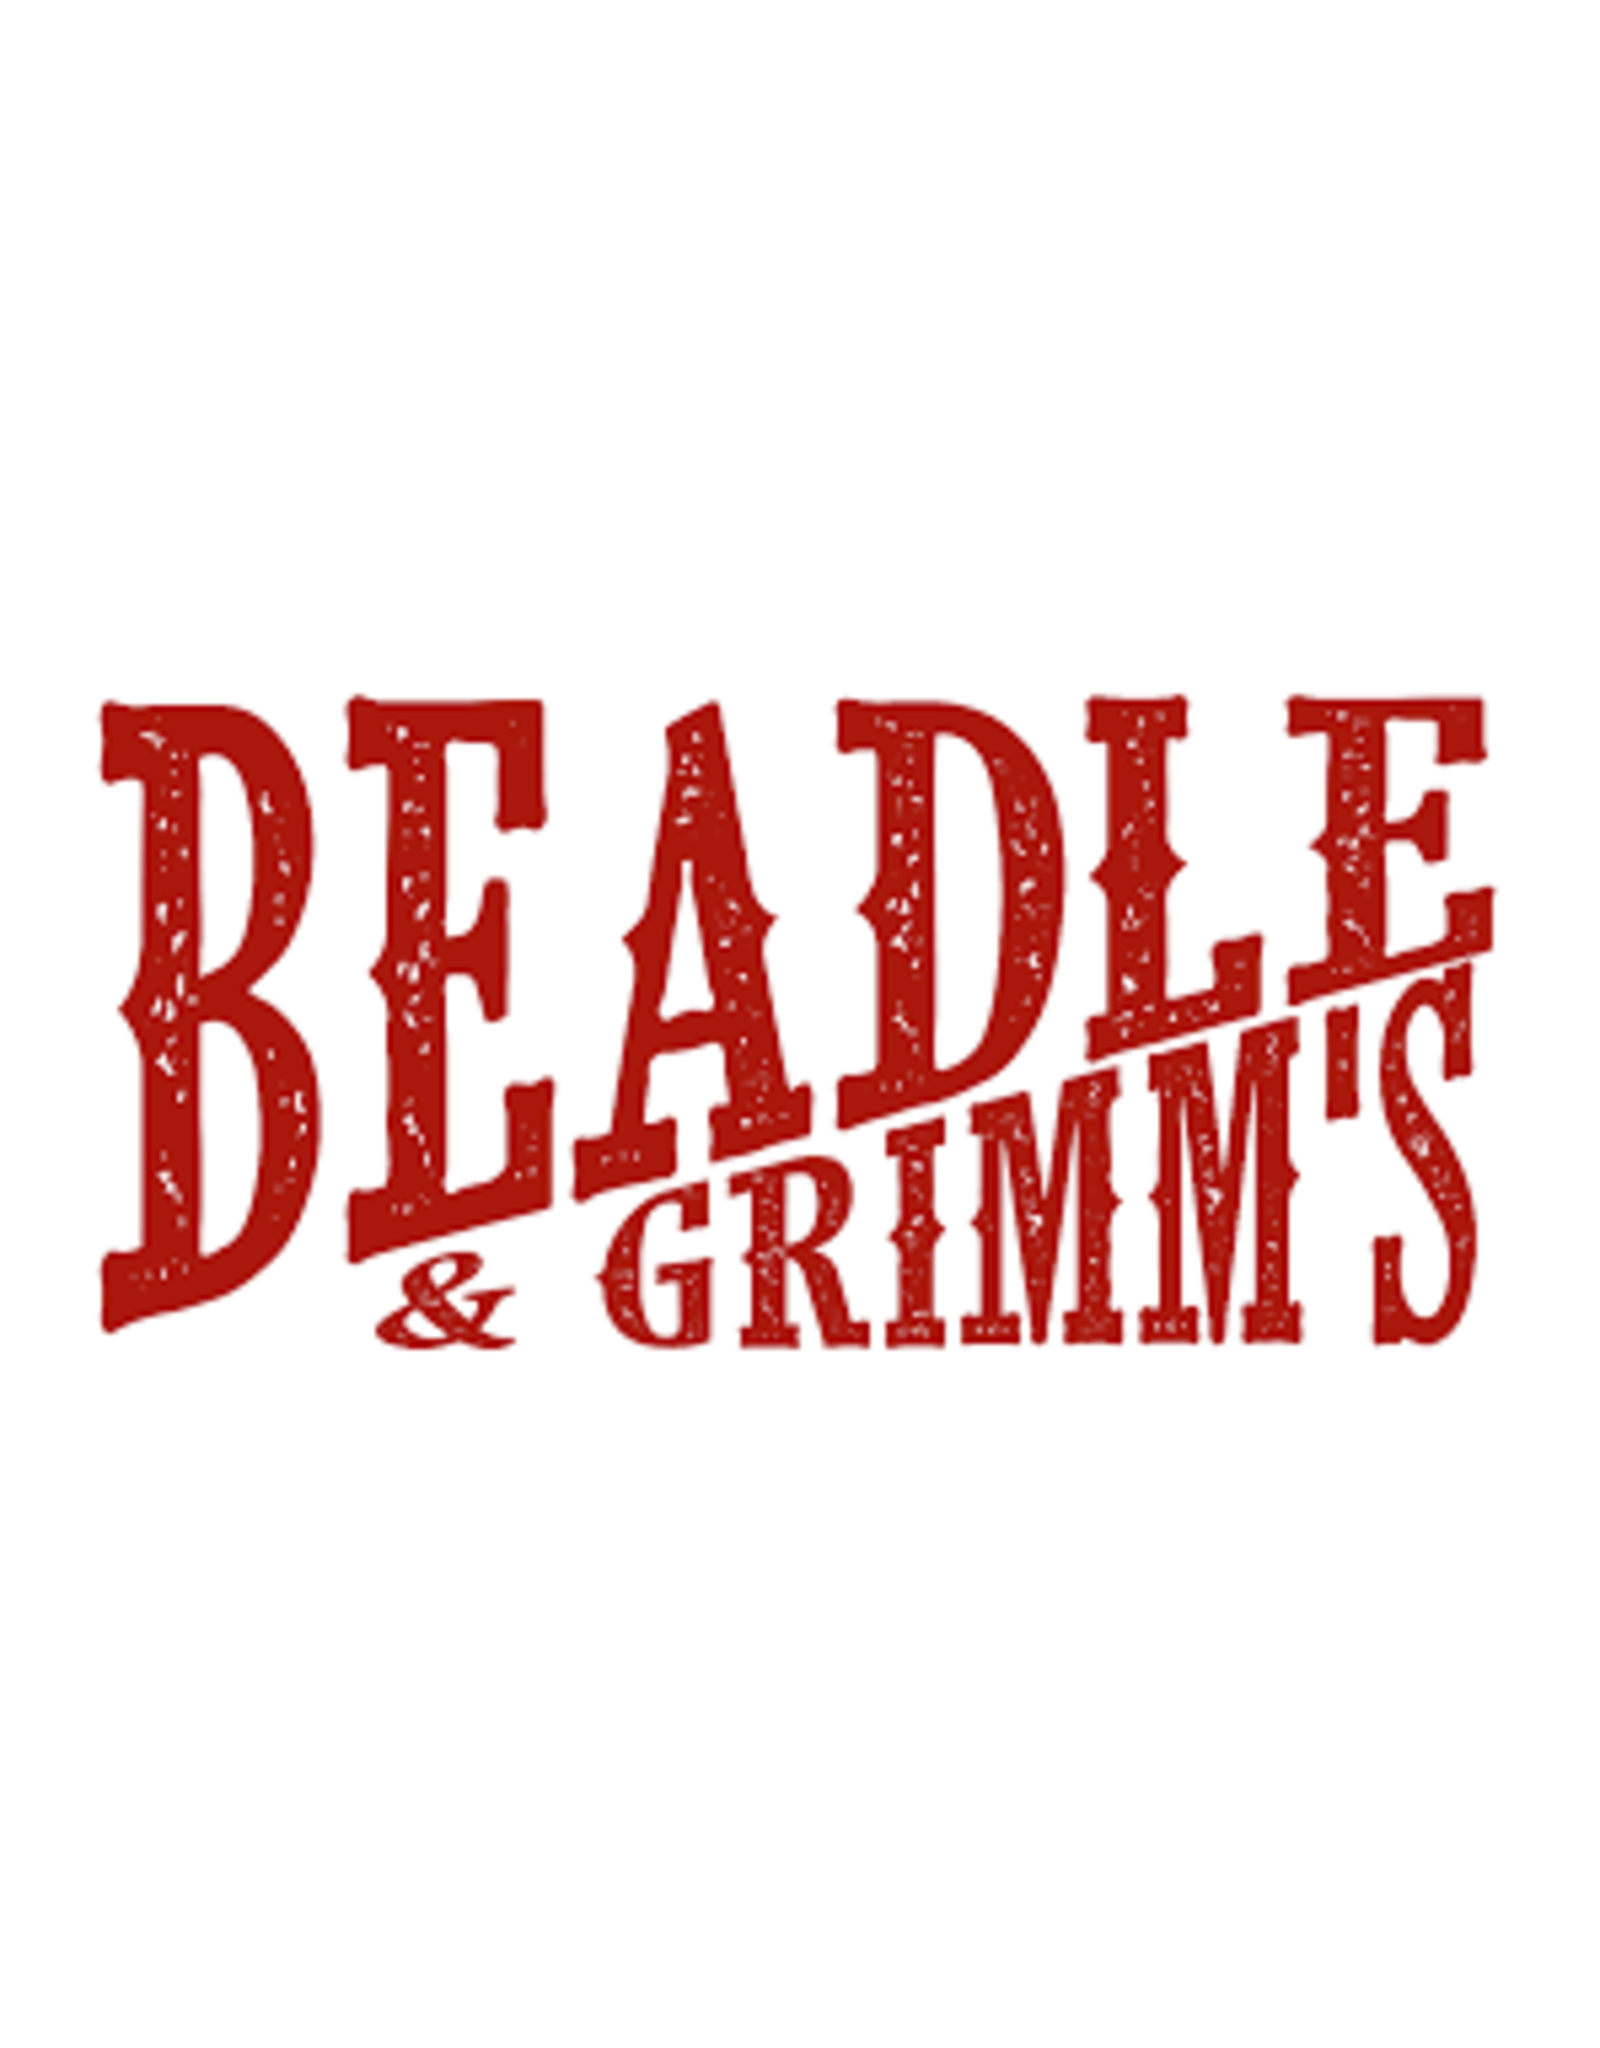 Beadle and Grimm Classic Module Dice Collection: Ravenloft